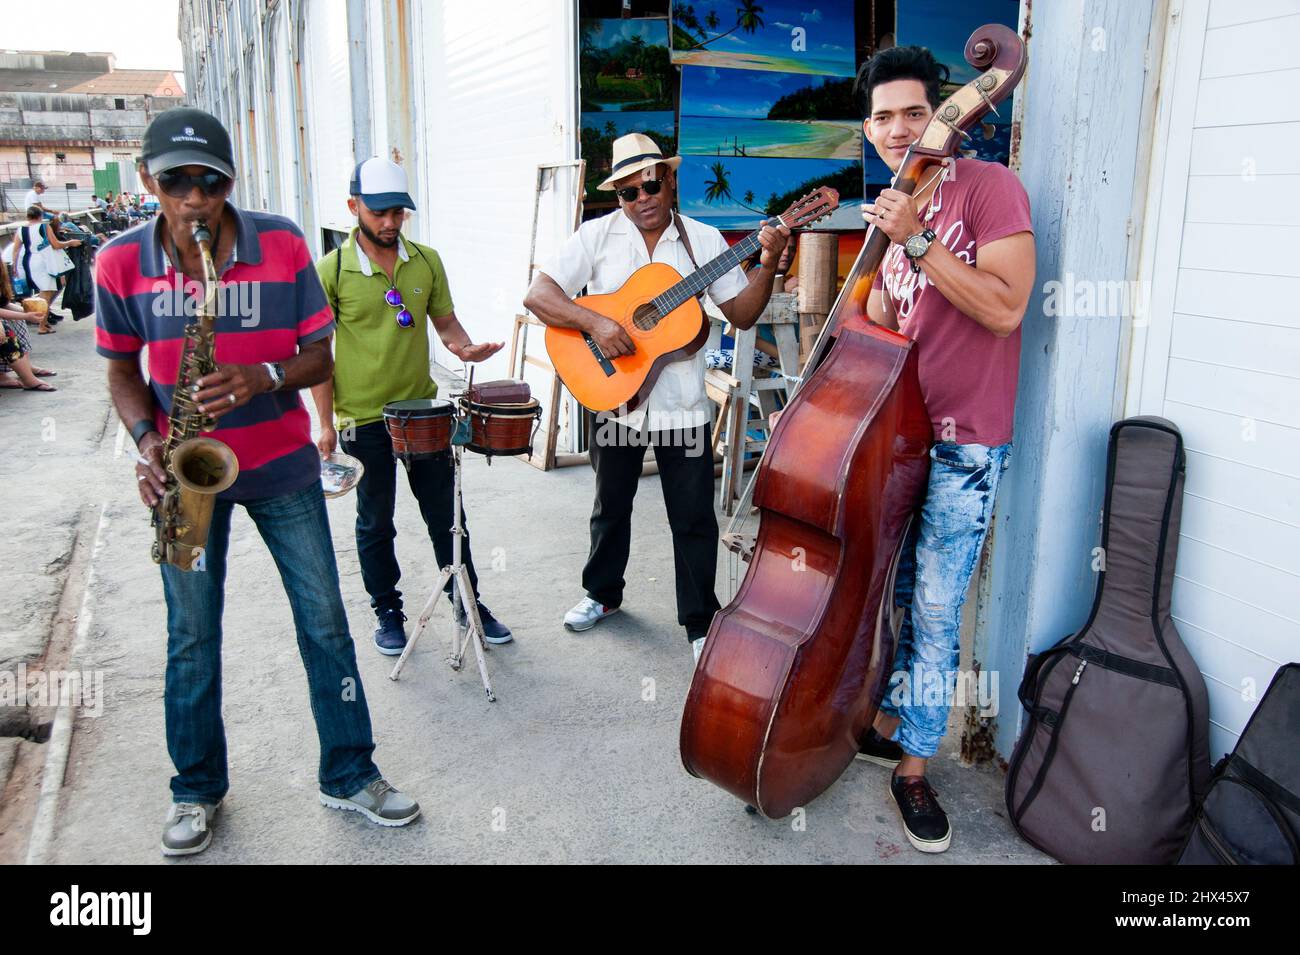 Cuban musicians have a jam session  outdoor the Almacenes San Jose market in Old Havana, Cuba. Stock Photo